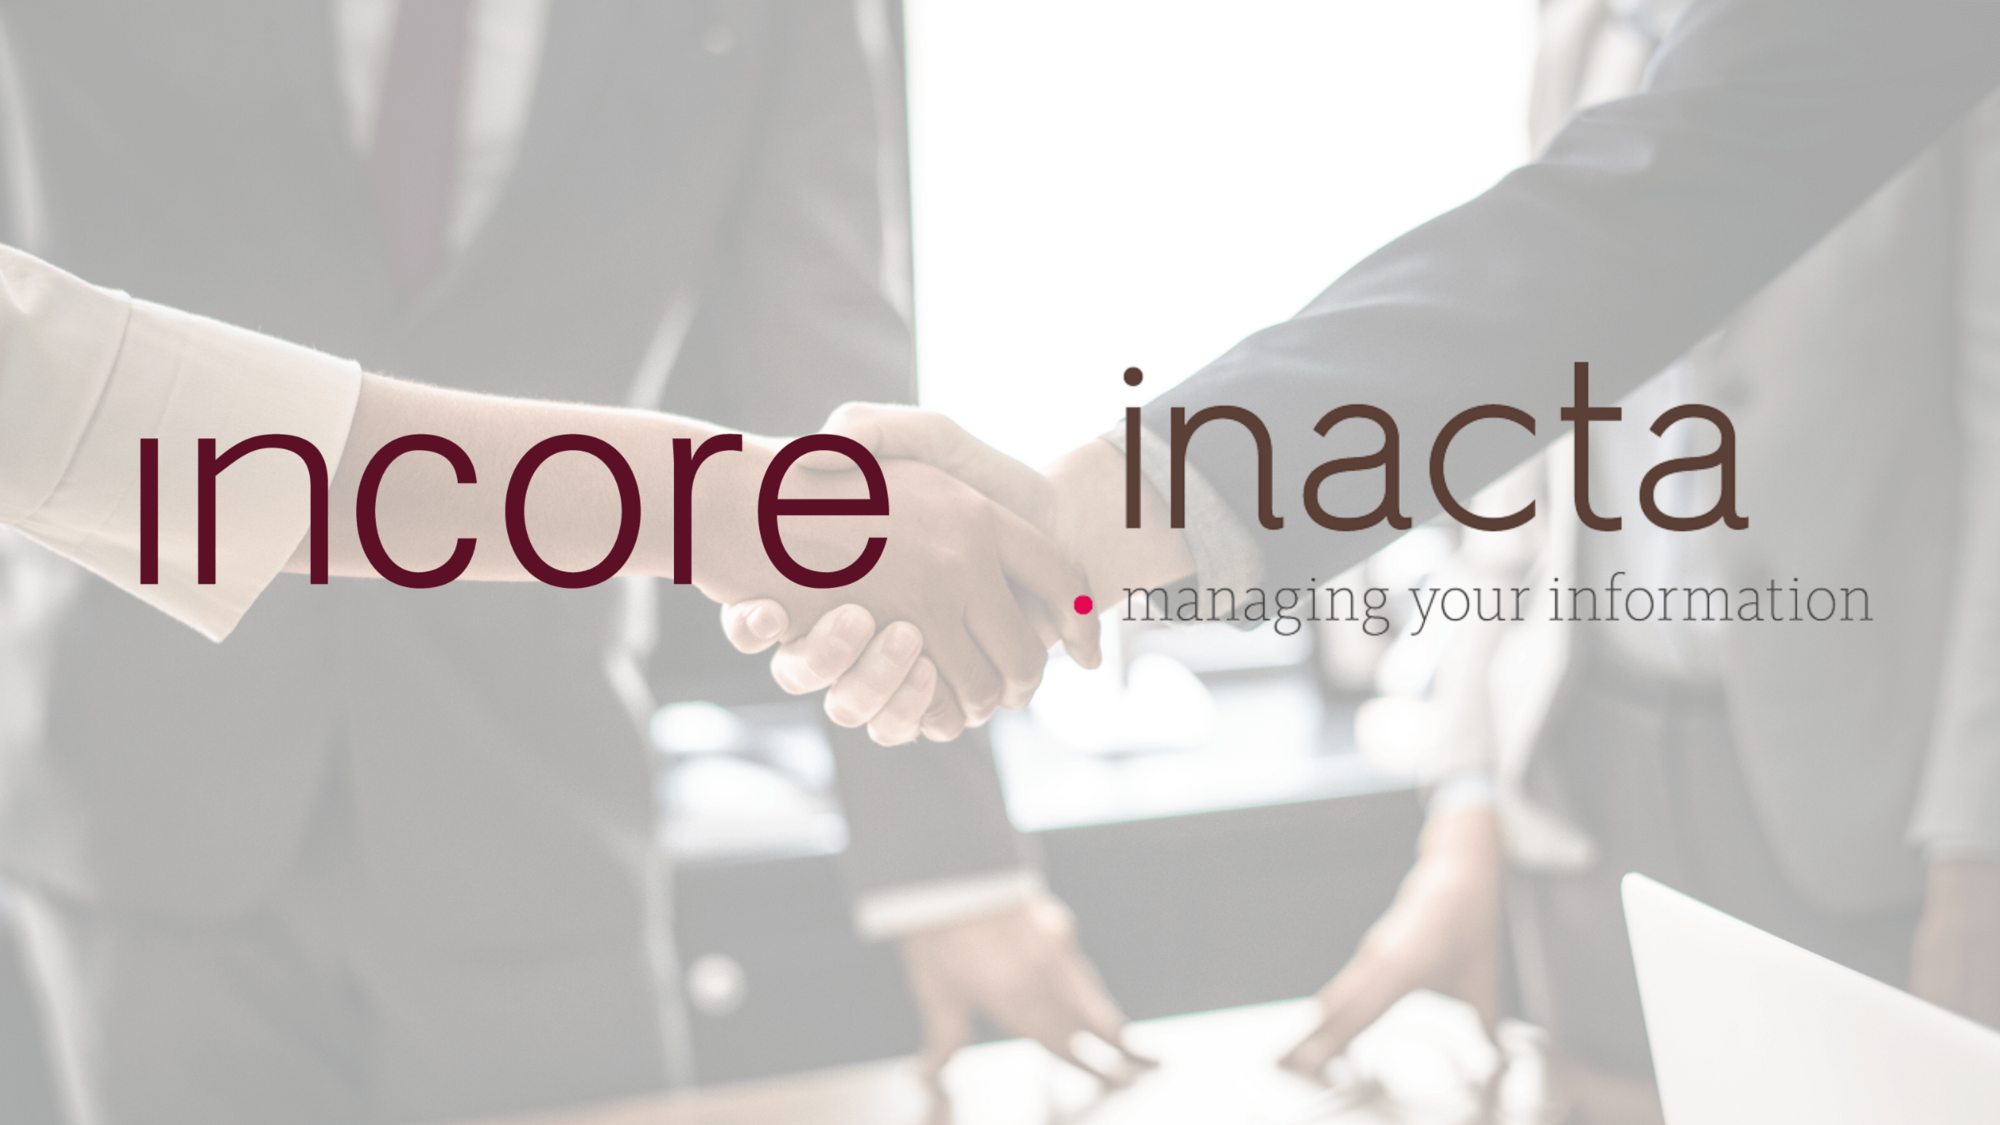 Partnerschaft inacta und InCore Bank